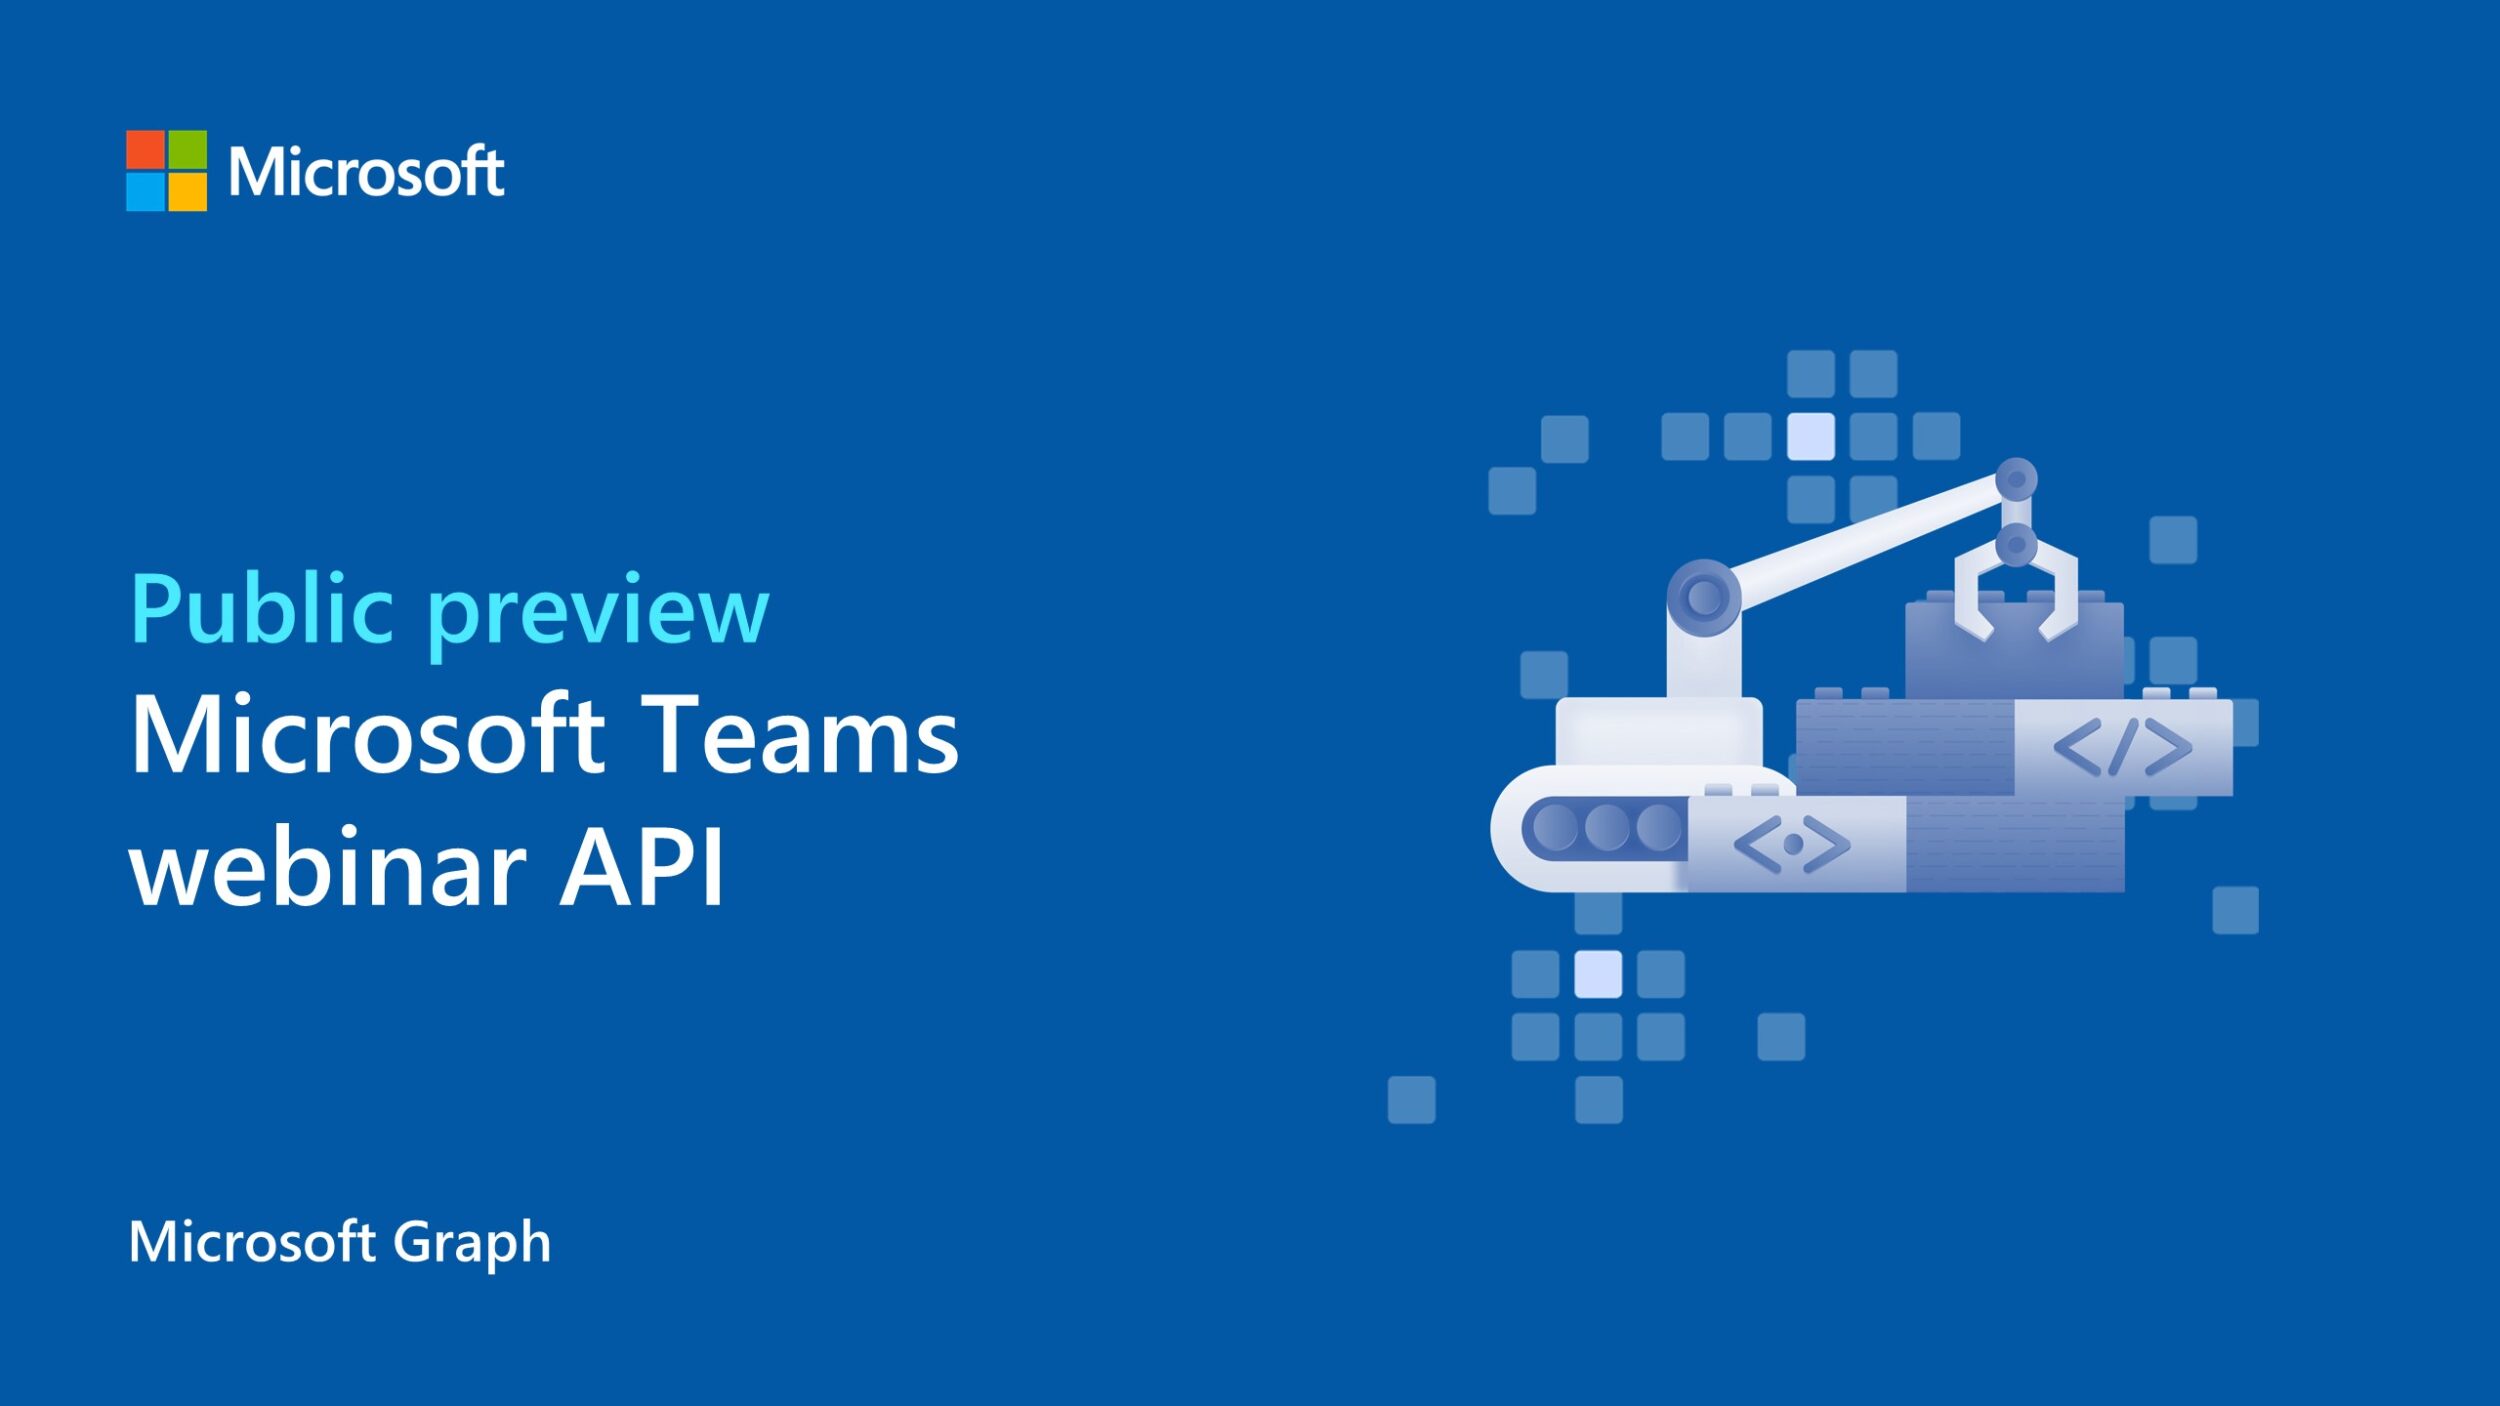 Microsoft Teams webinar APIs in public preview